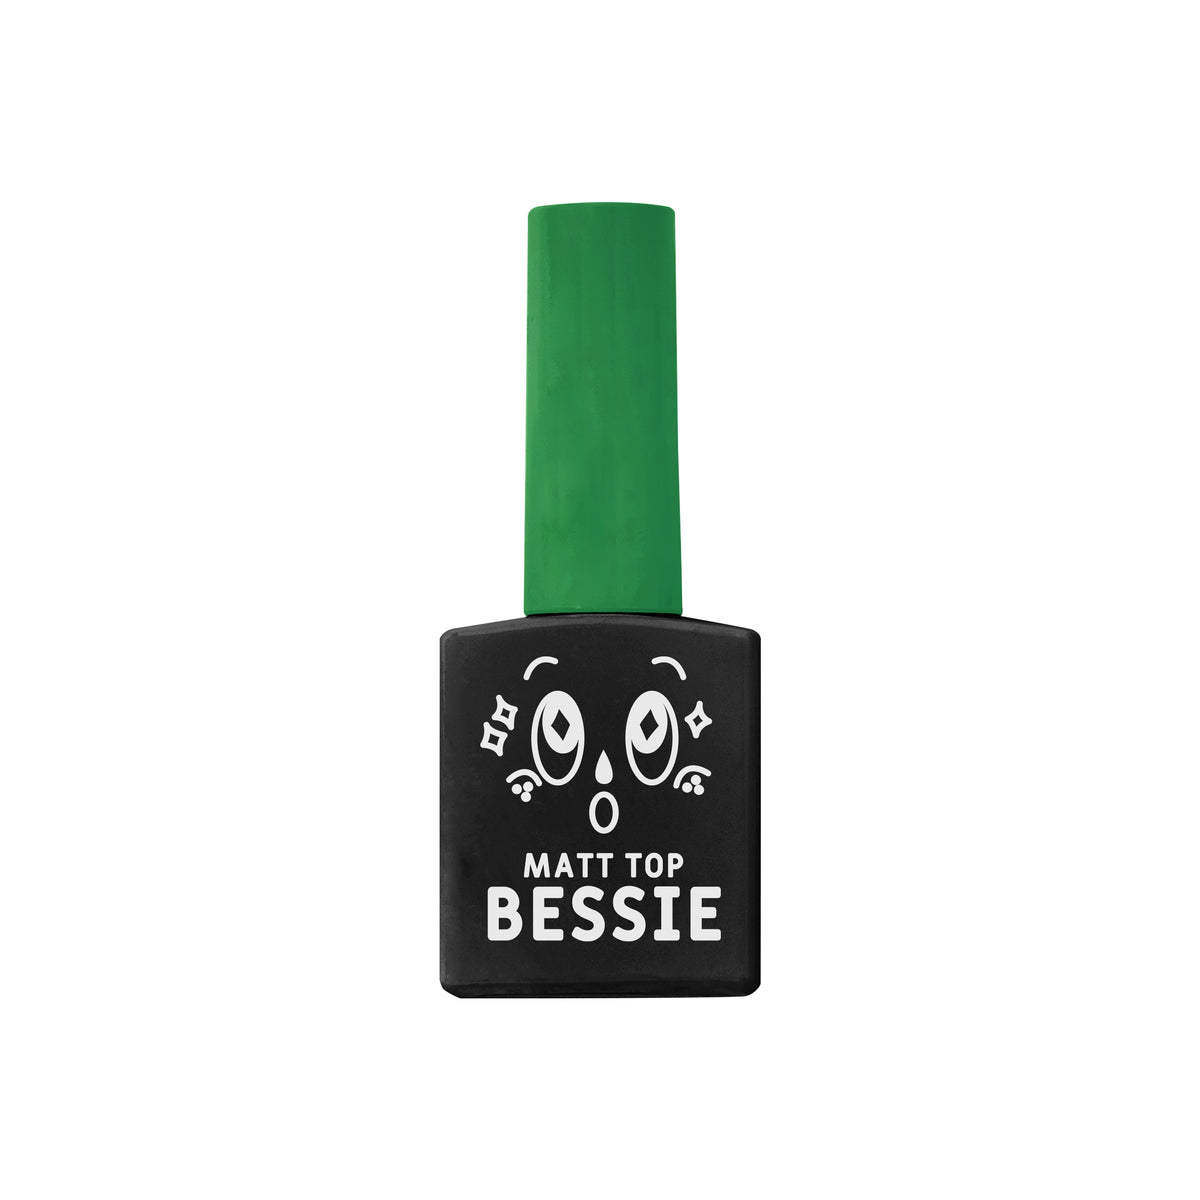 Bessie basic gels - No wipe Top / No wipe Matte Top / Base / BIAB Clear